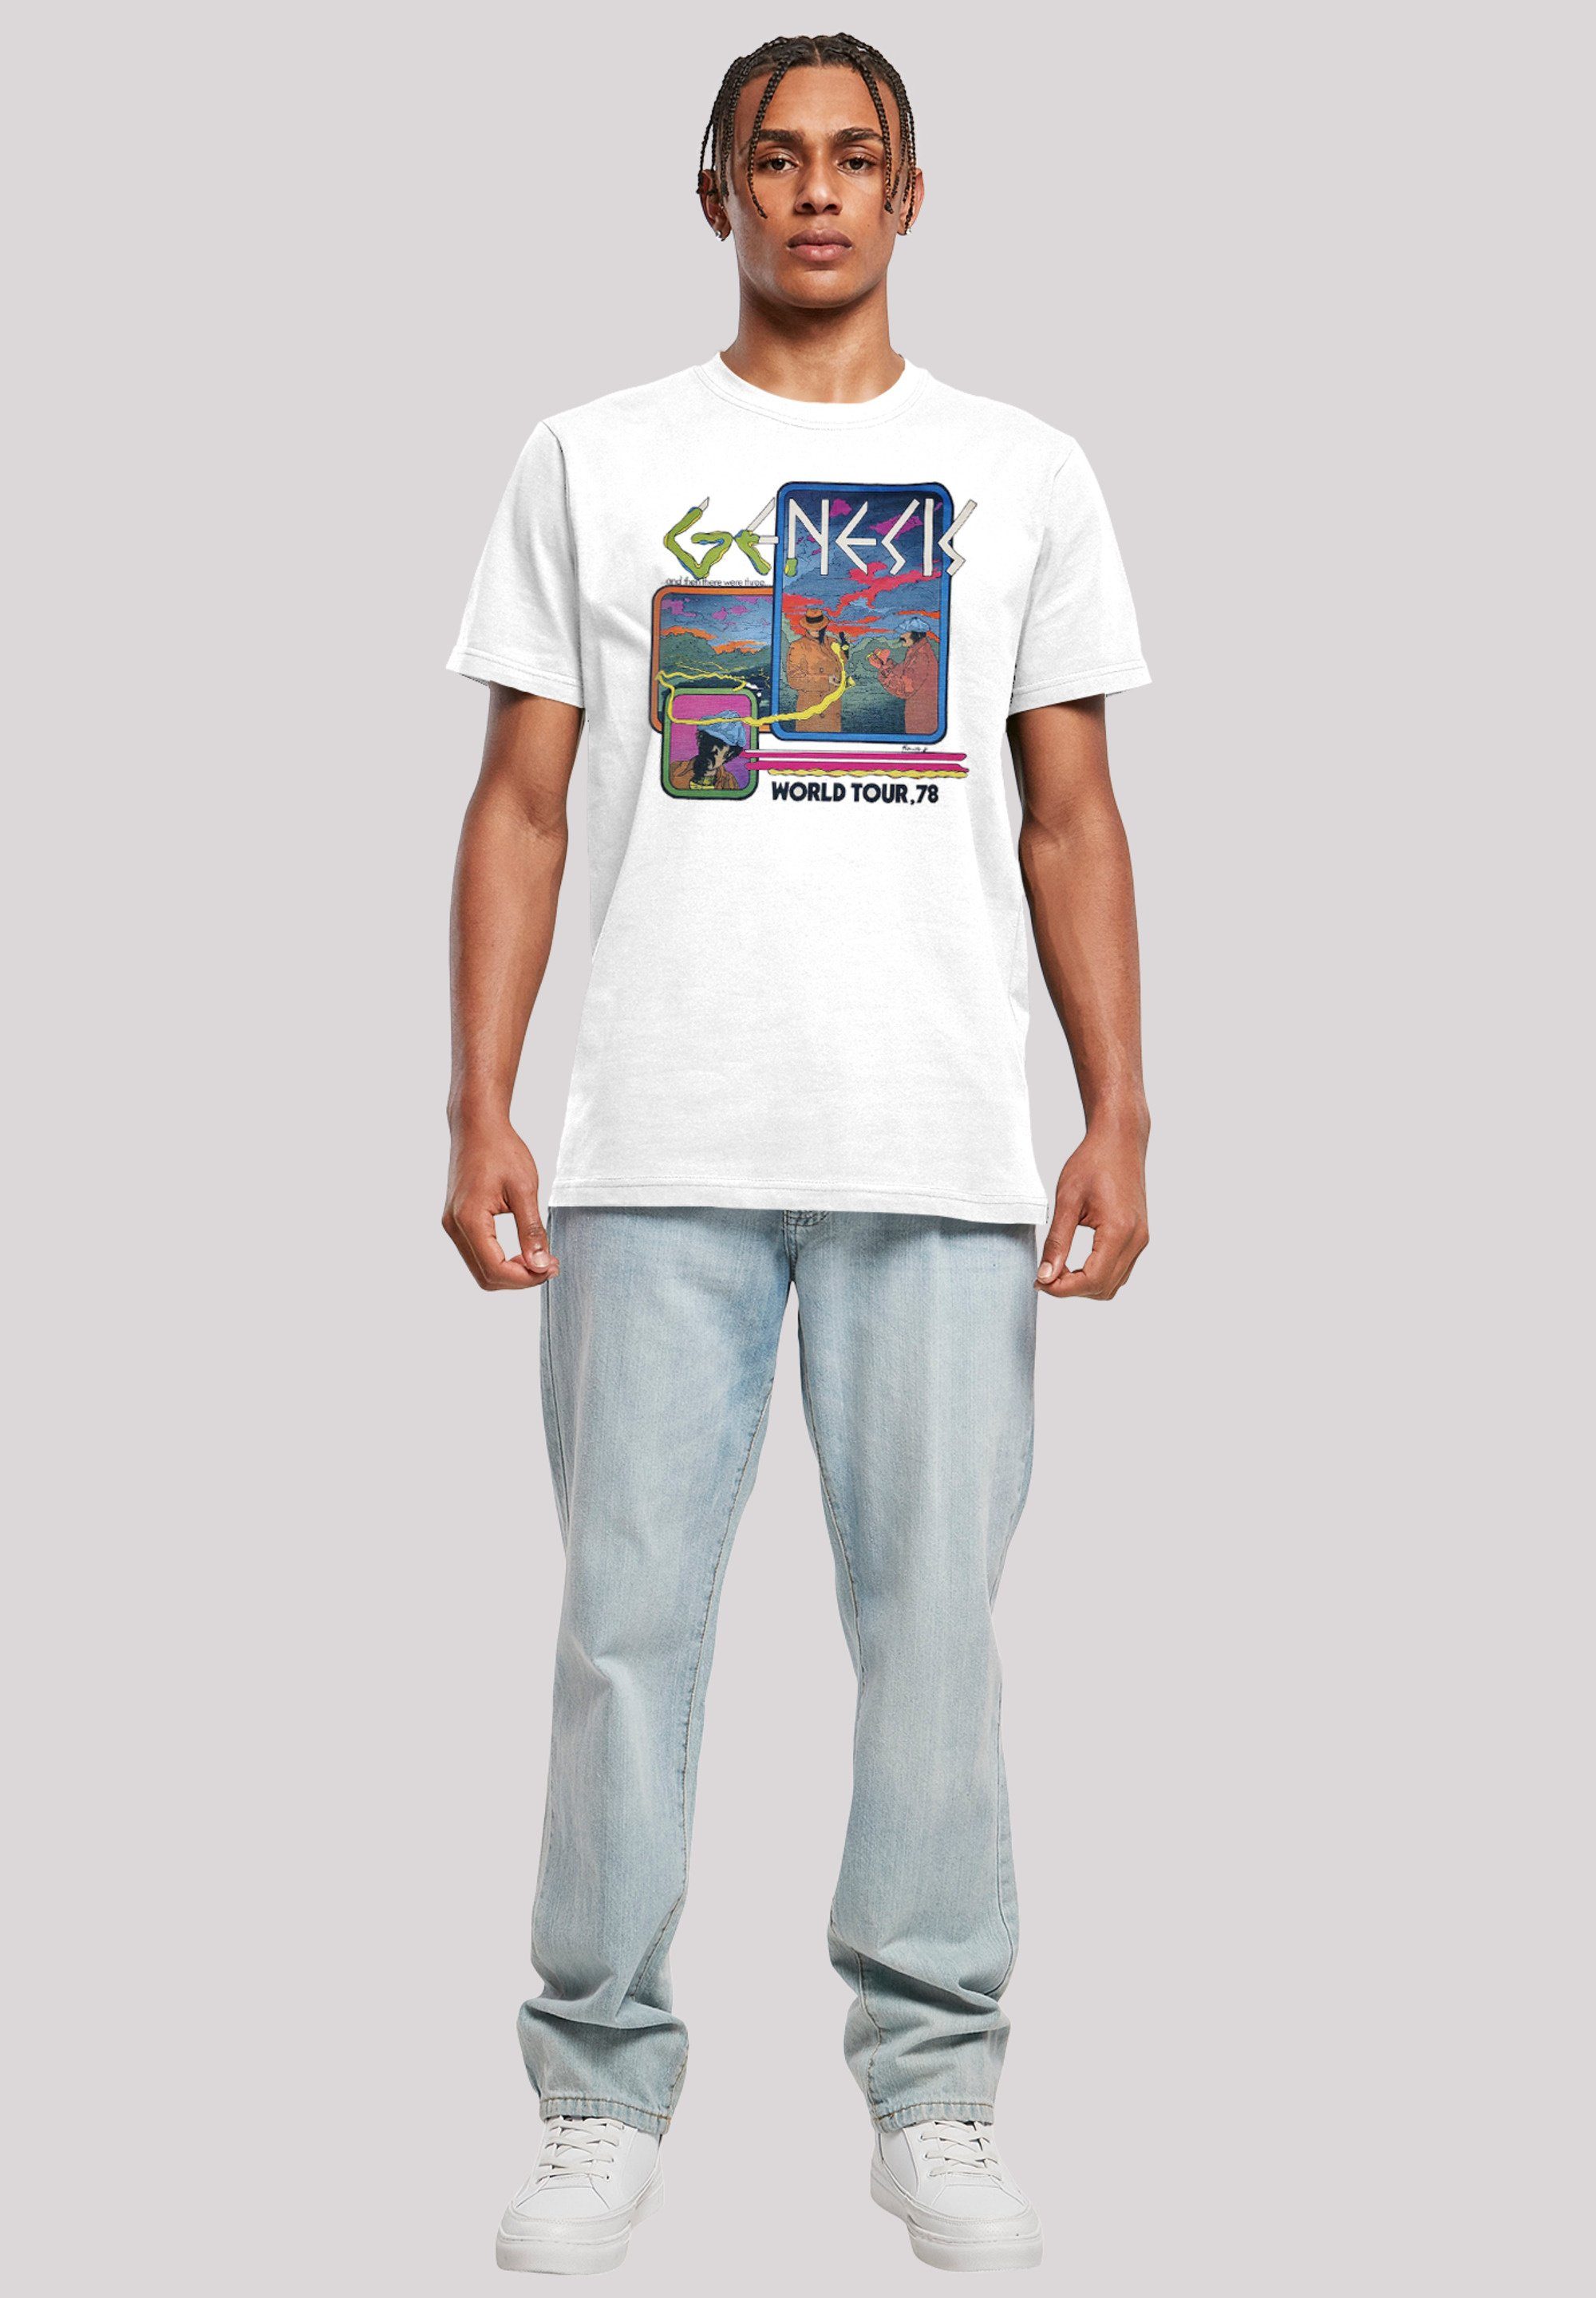 F4NT4STIC T-Shirt Genesis World Herren,Premium Tour Merch,Regular-Fit,Basic,Bandshirt 78 weiß